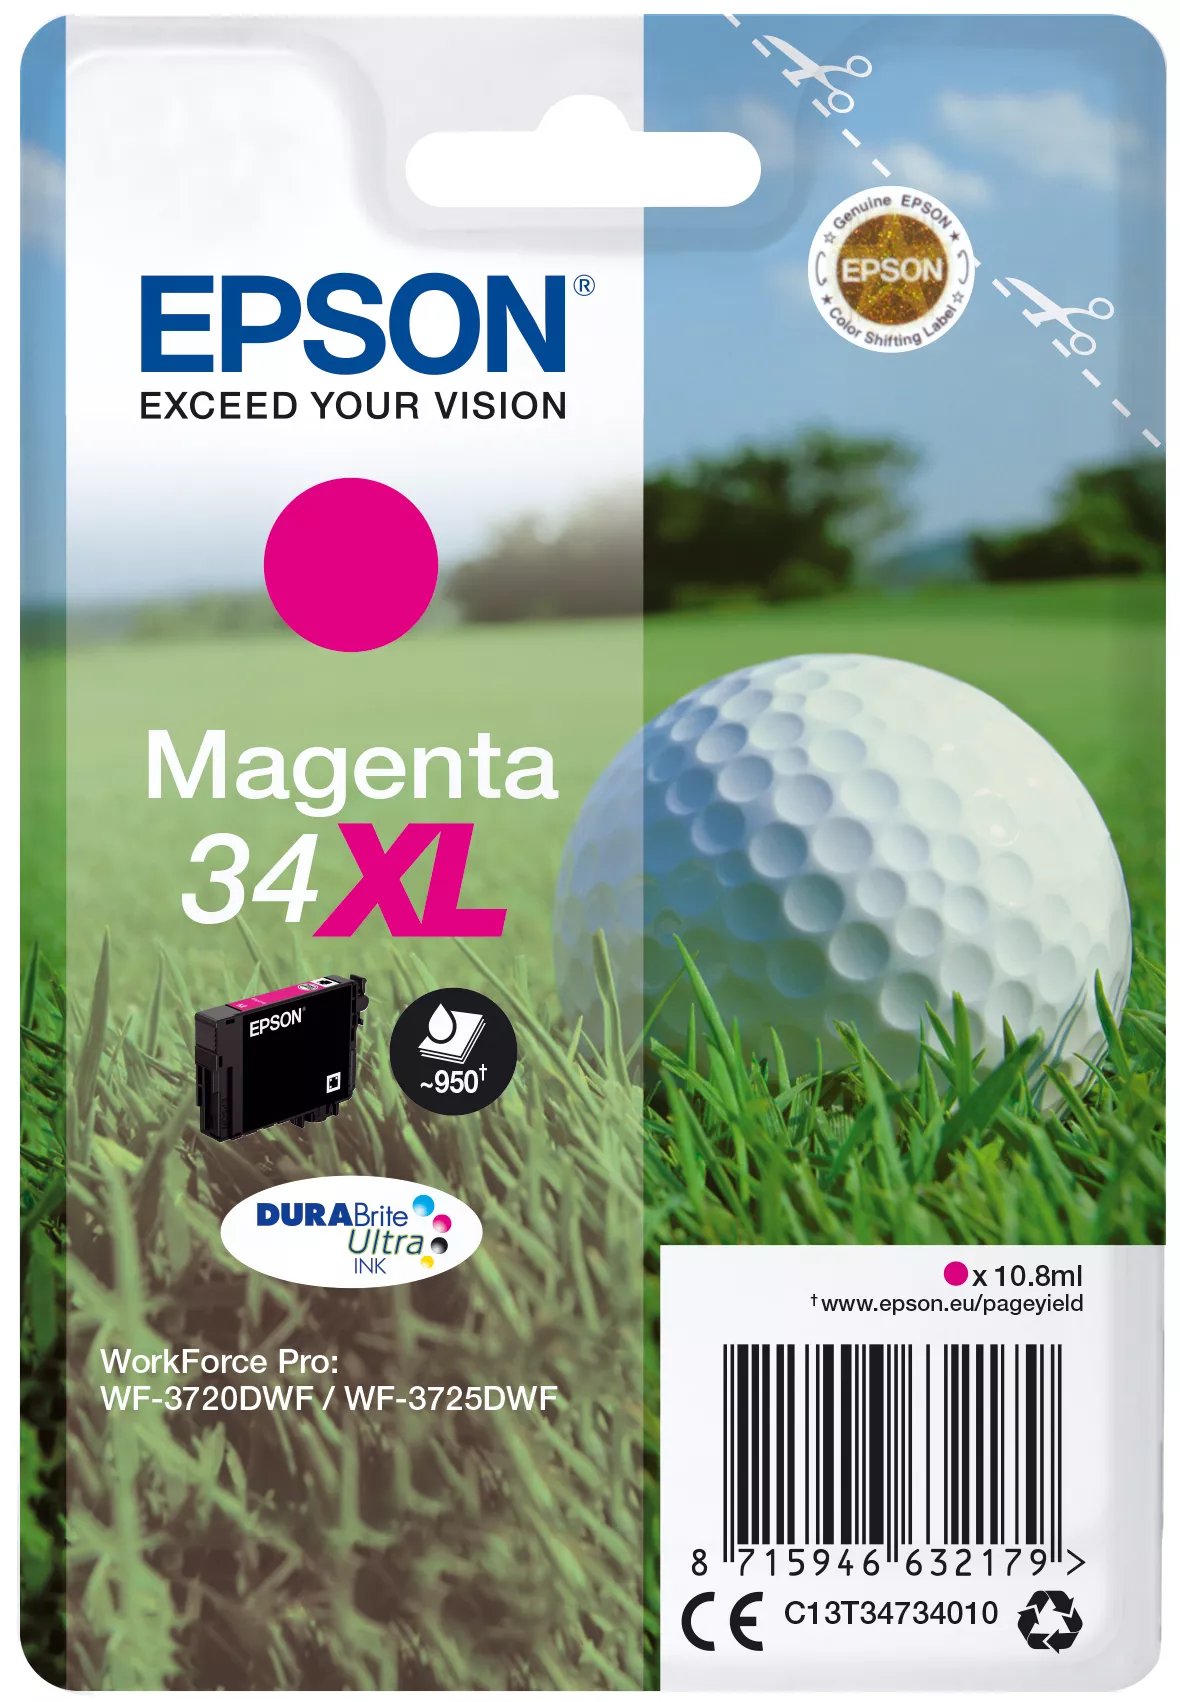 Vente EPSON Singlepack 34XL Encre Magenta DURABrite Ultra 10 au meilleur prix